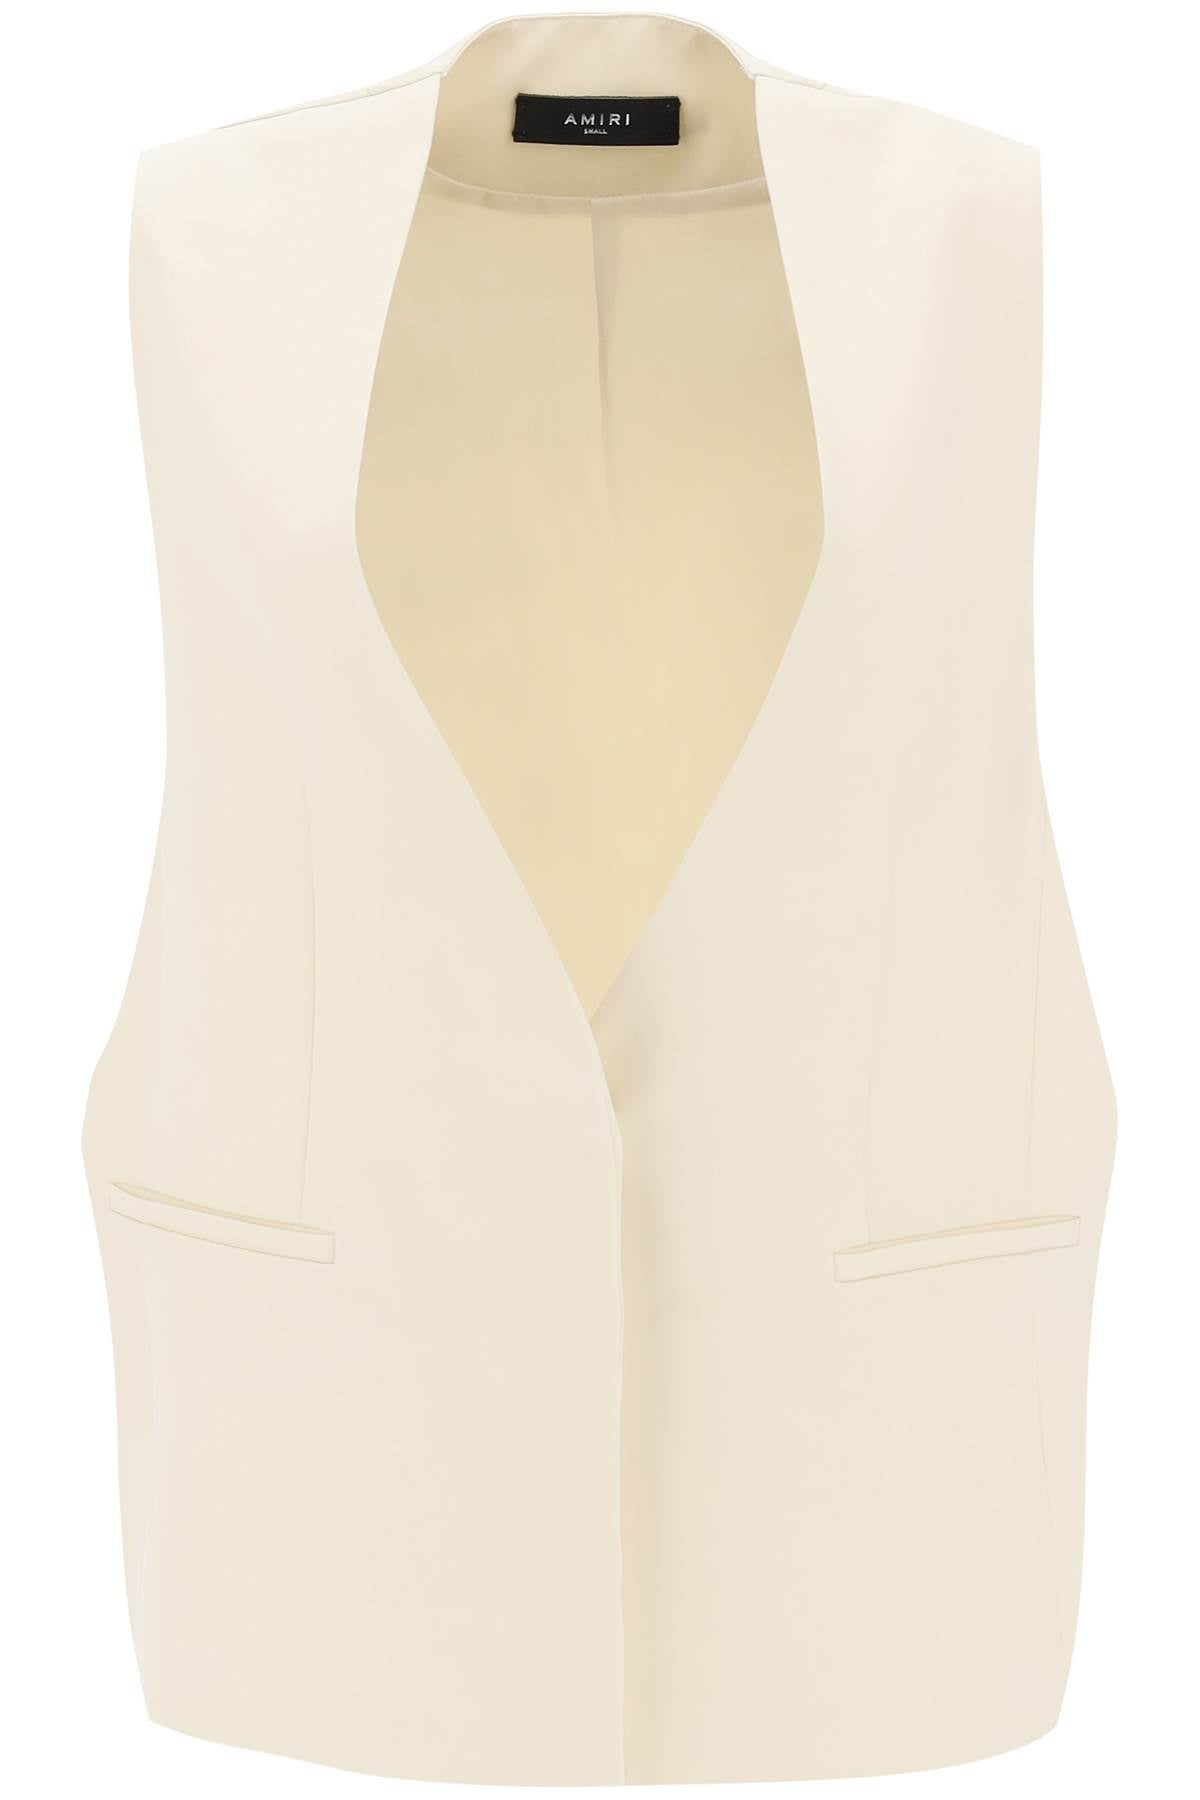 AMIRI Oversized White Waistcoat for Women - Cupro and Viscose Blend